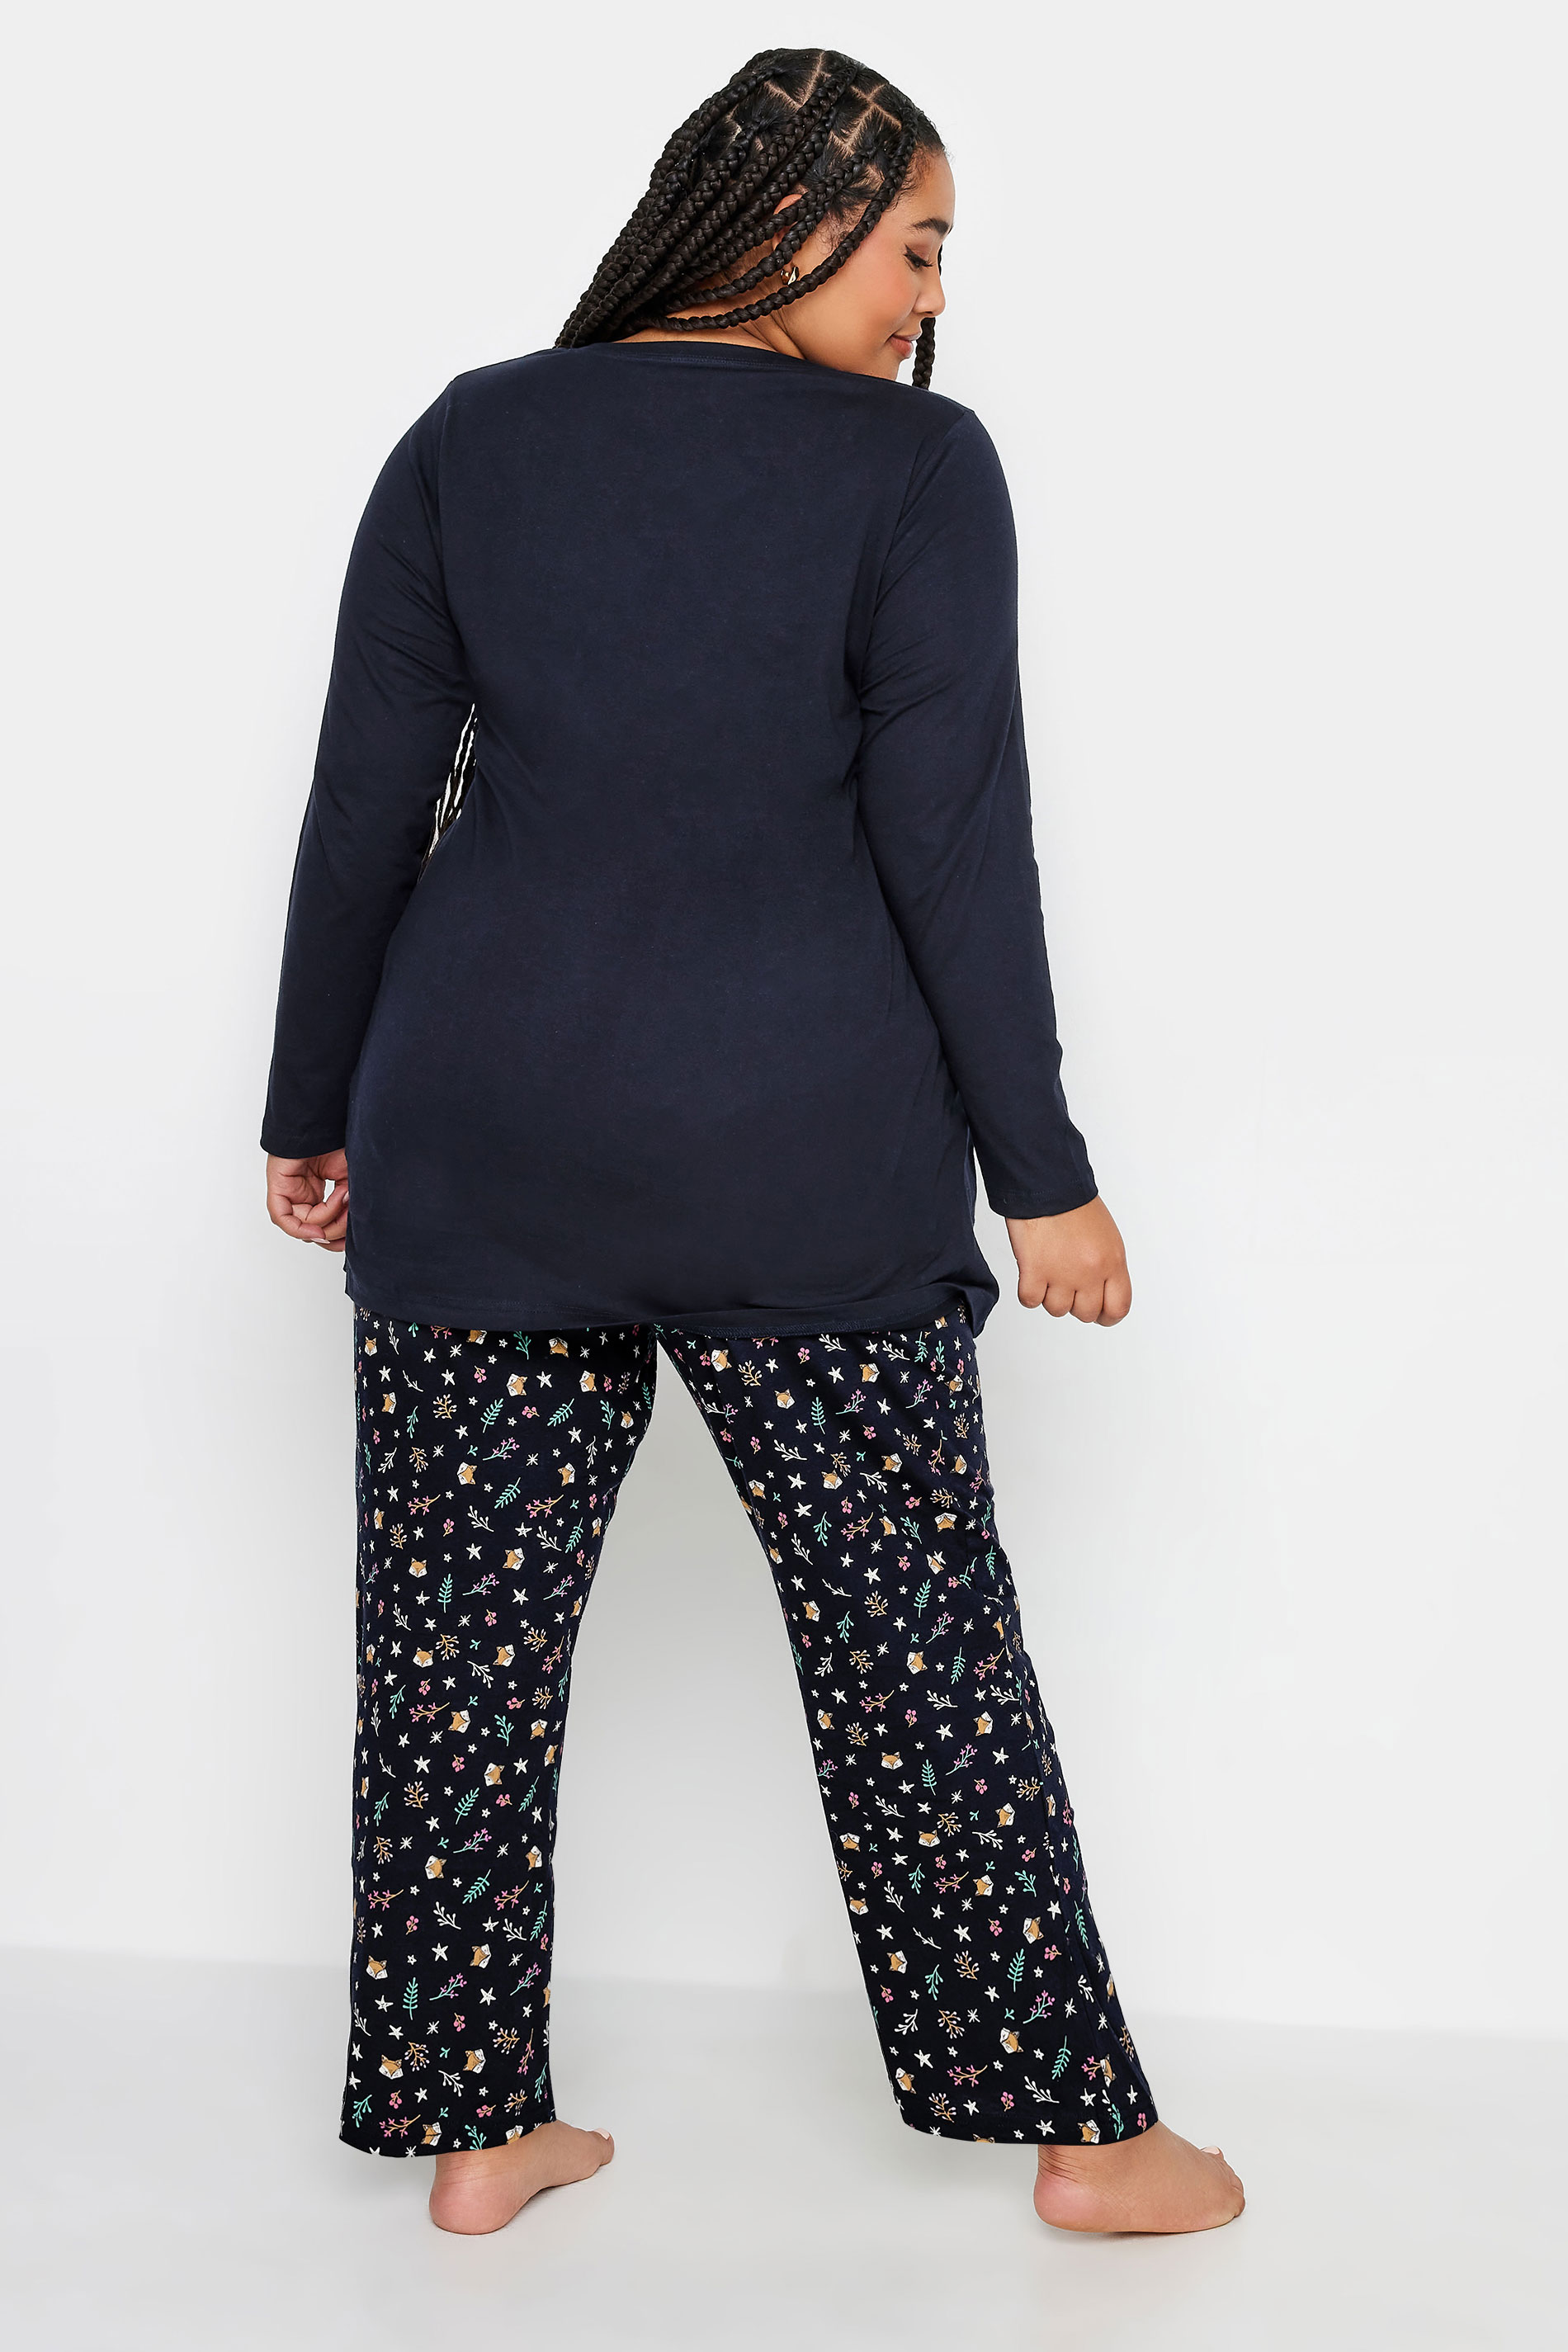 YOURS Plus Size Navy Blue 'Good Night Sleep Tight' Slogan Wide Leg Pyjama Set | Yours Clothing 3